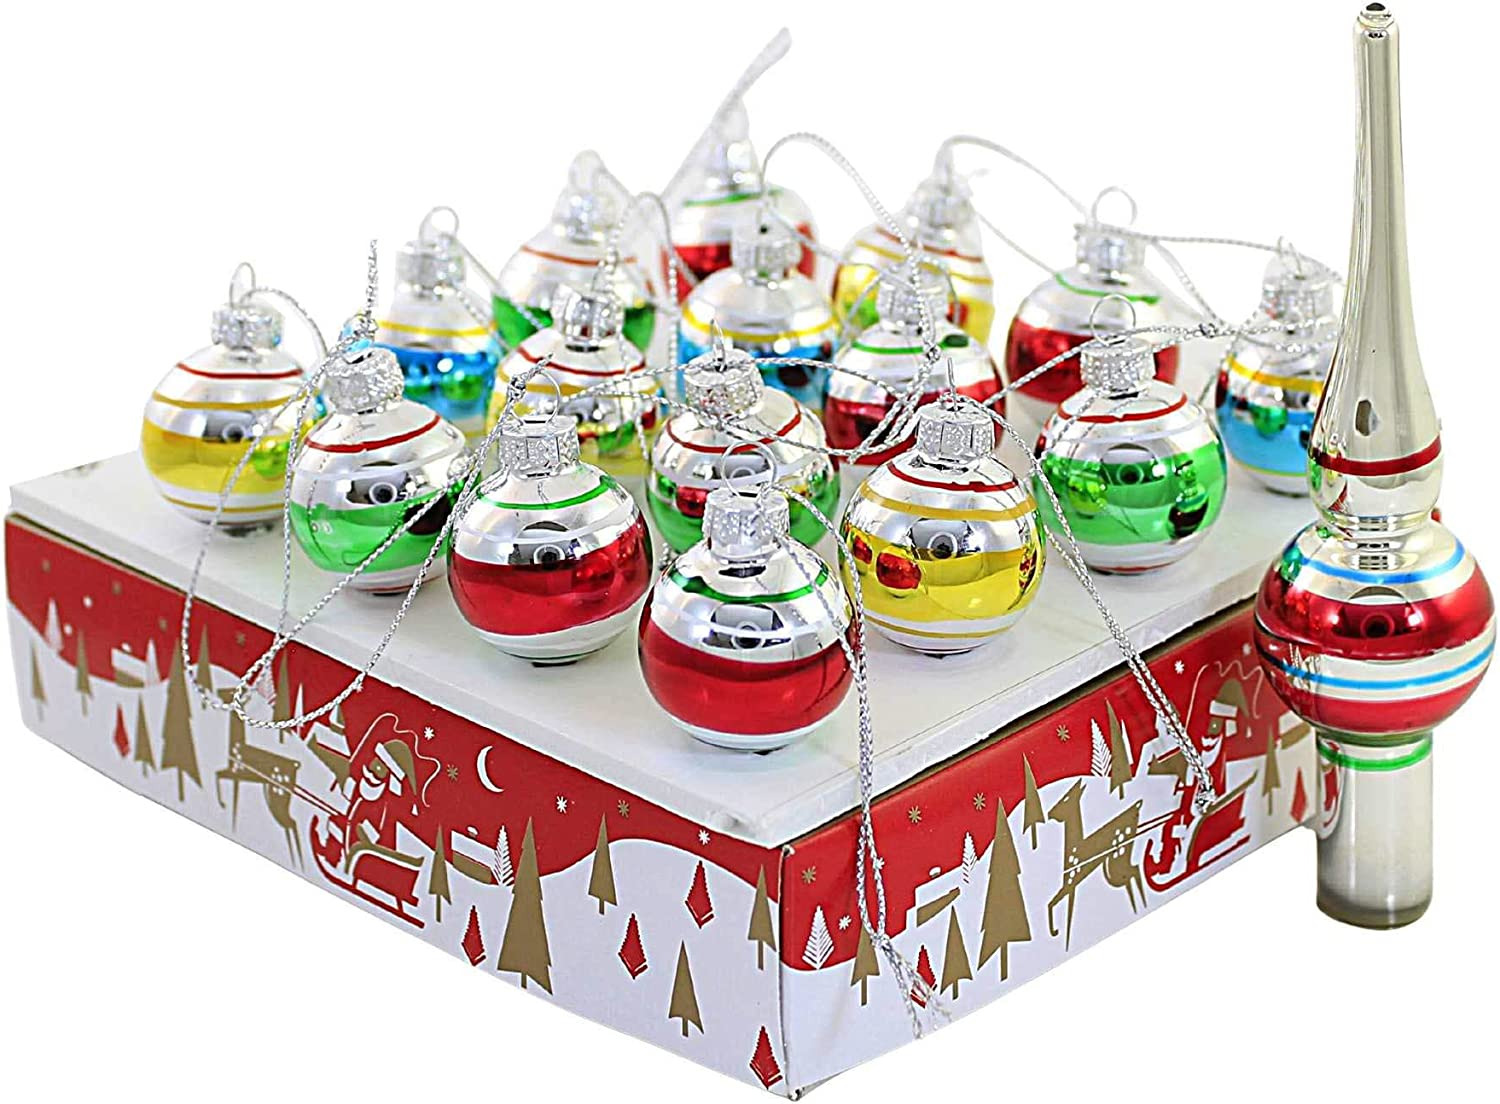 Kurt Adler Miniature Ornaments and Treetop Set of 16  New